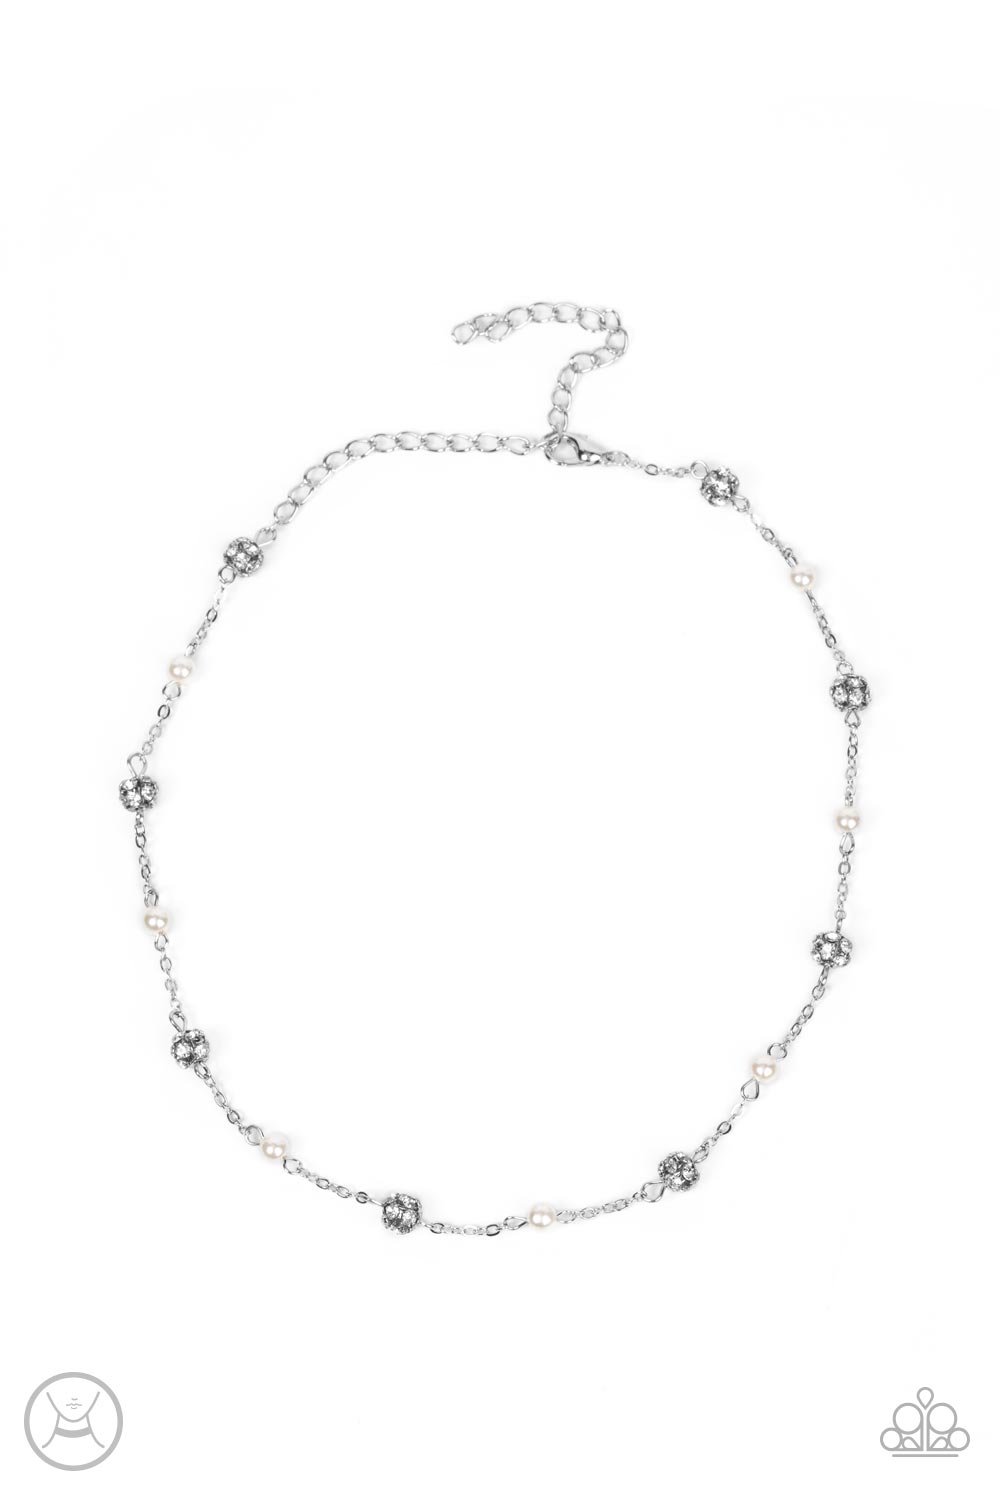 Rumored Romance White Pearl &amp; Rhinestone Choker Necklace - Paparazzi Accessories- lightbox - CarasShop.com - $5 Jewelry by Cara Jewels